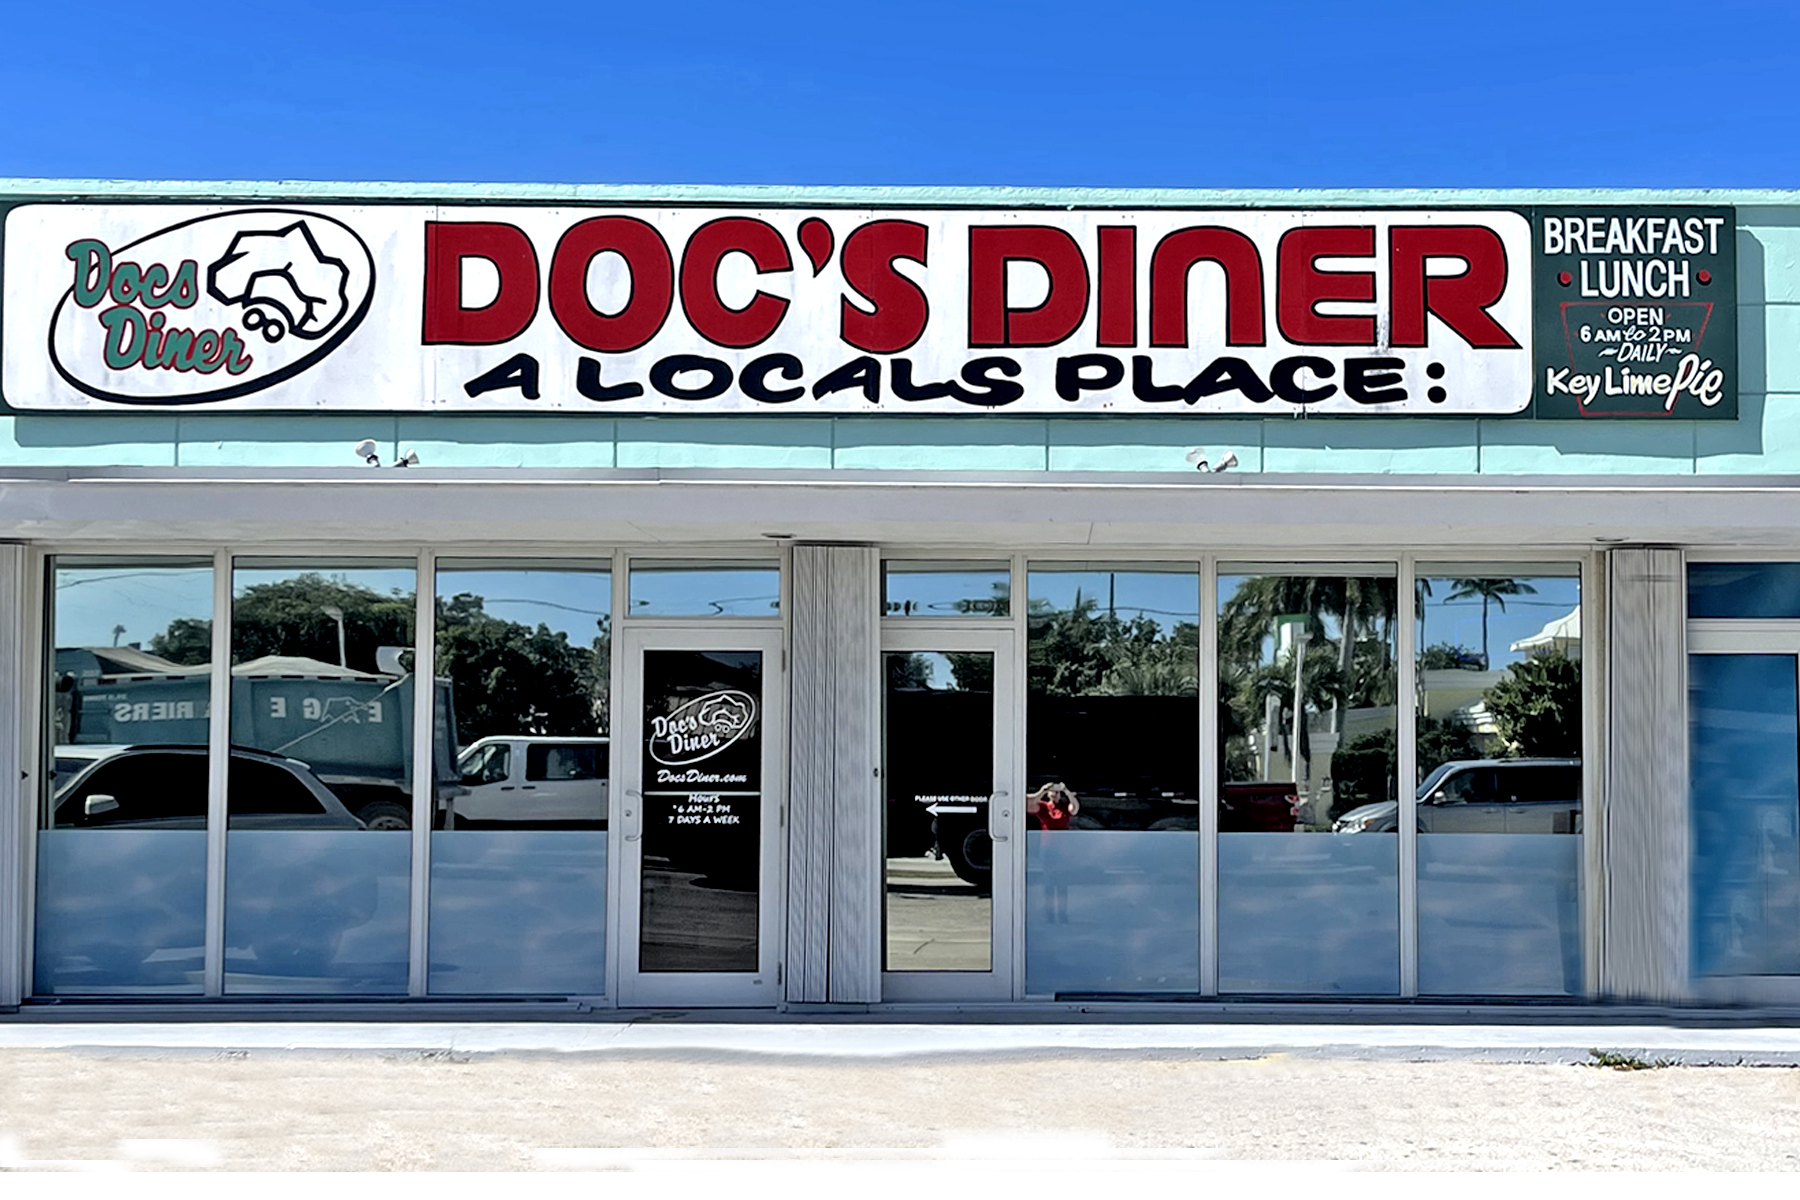 Doc's Diner